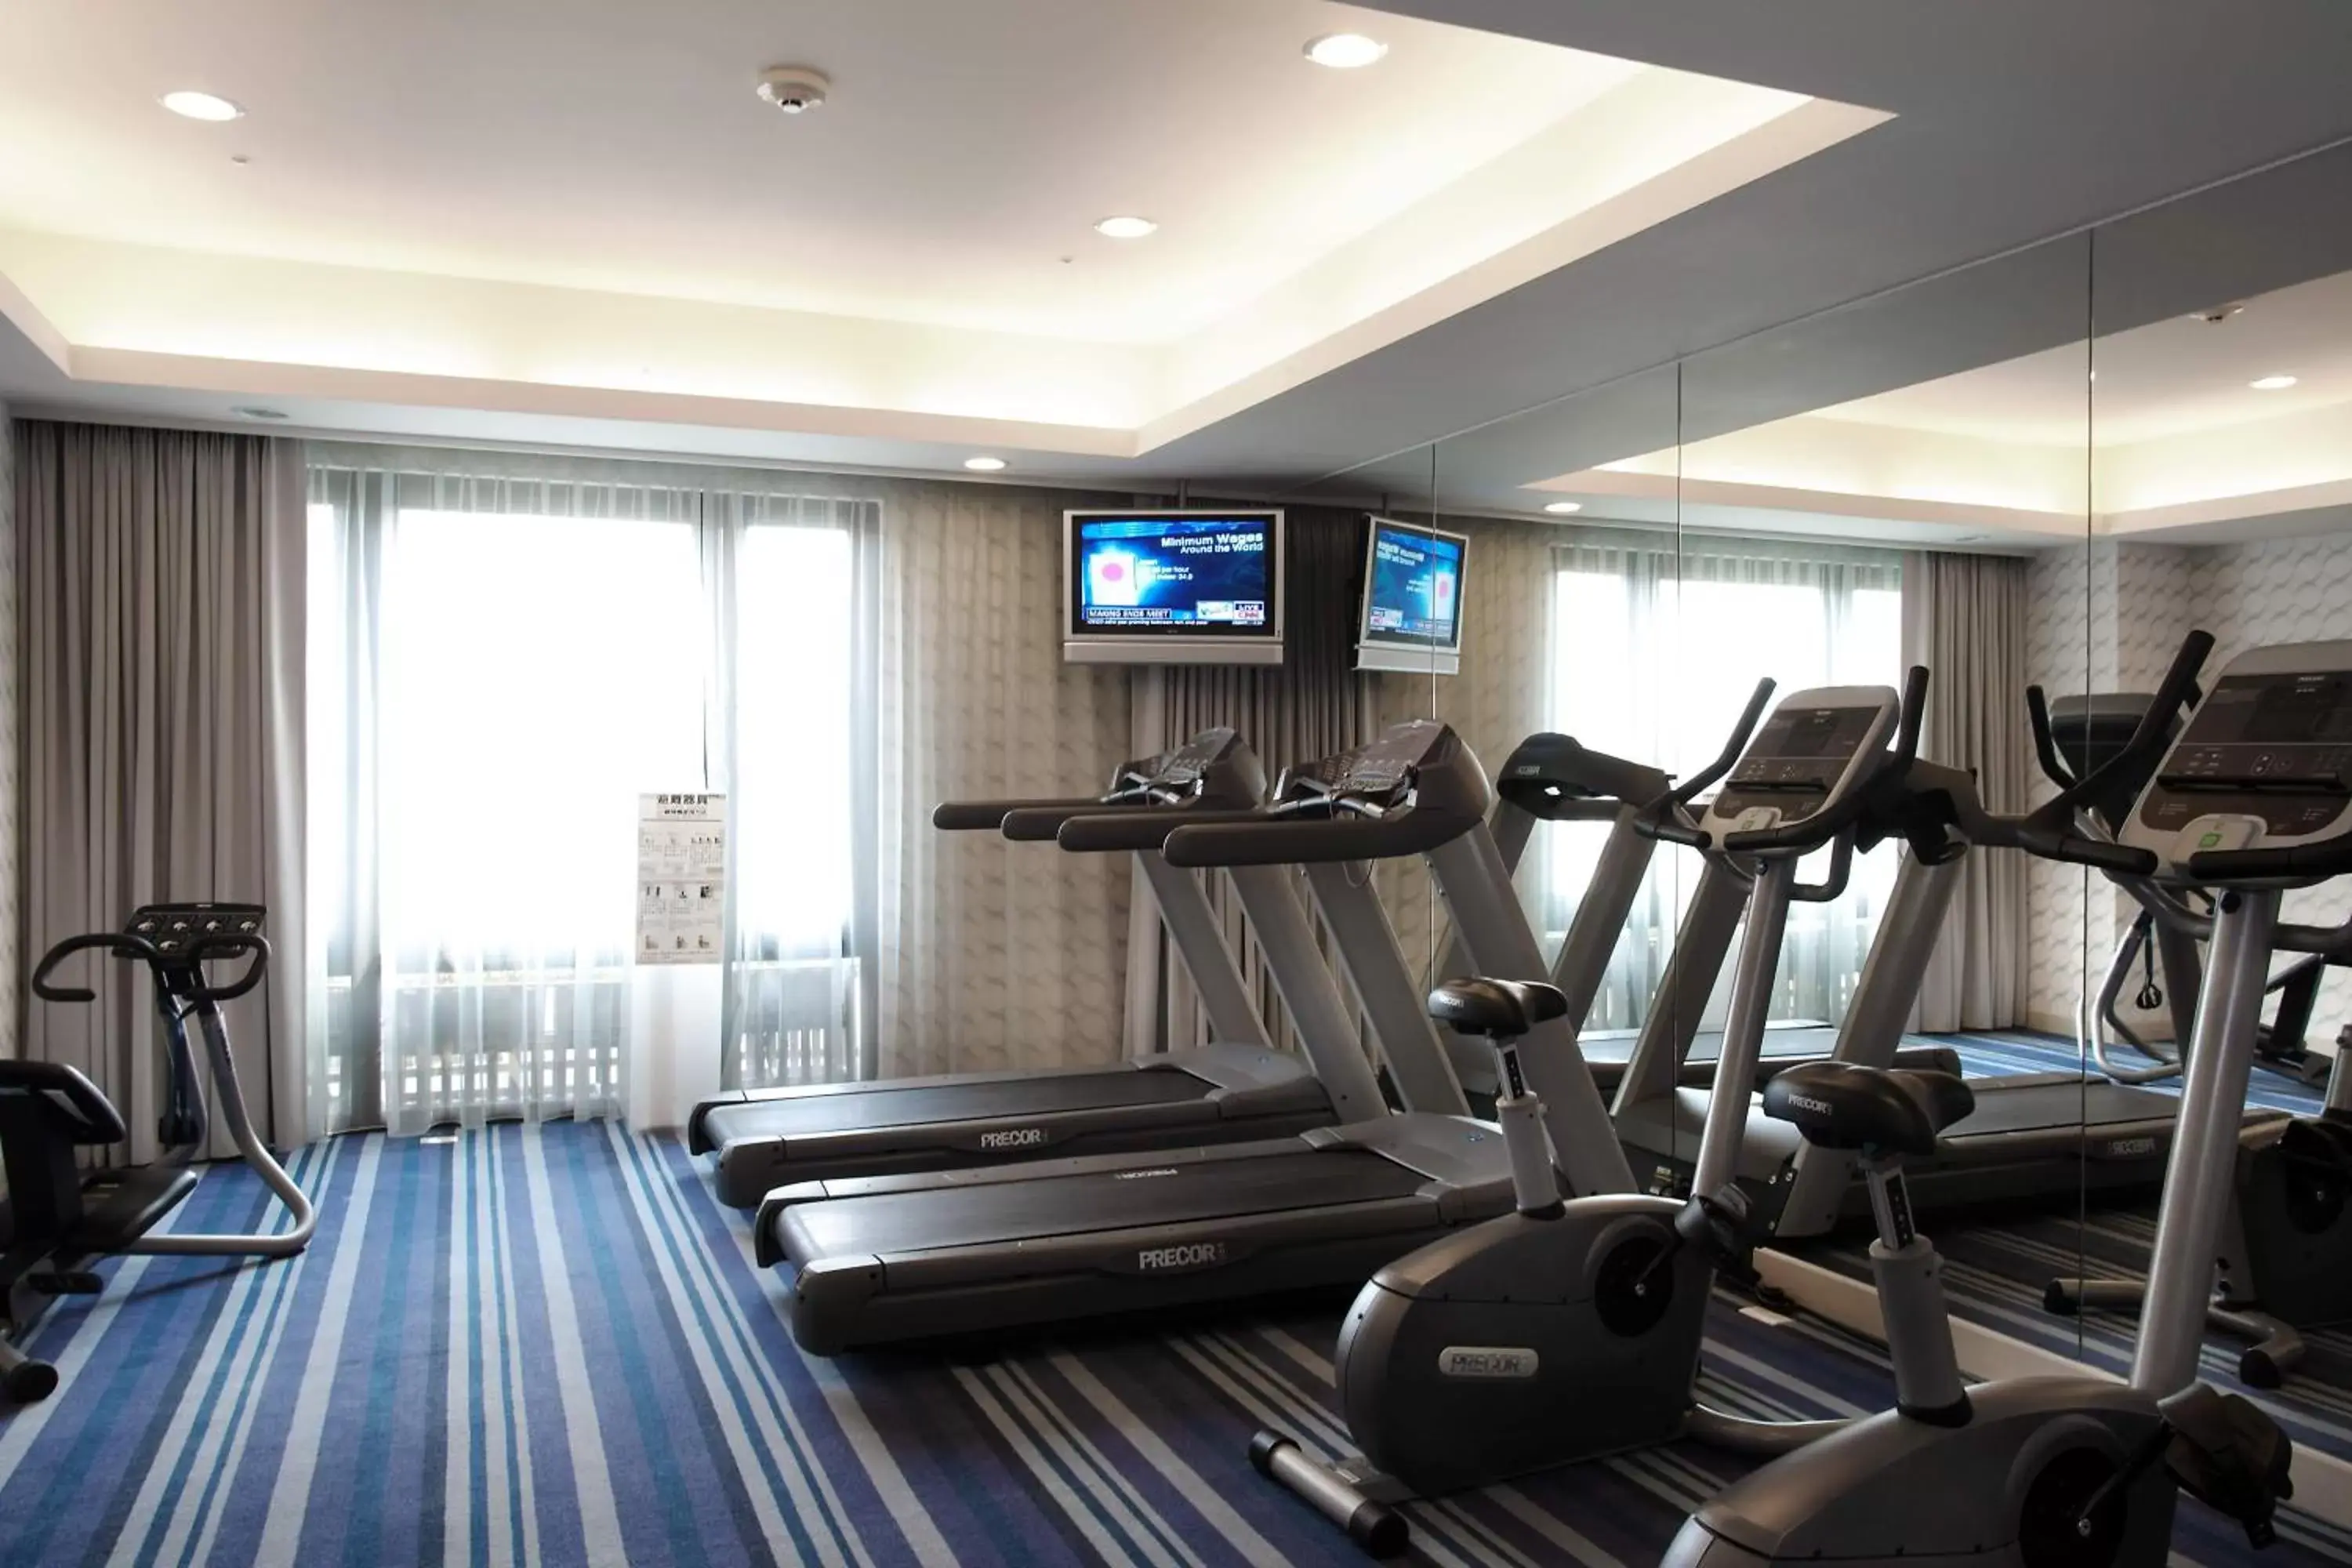 Fitness centre/facilities, Fitness Center/Facilities in Grand Victoria Hotel